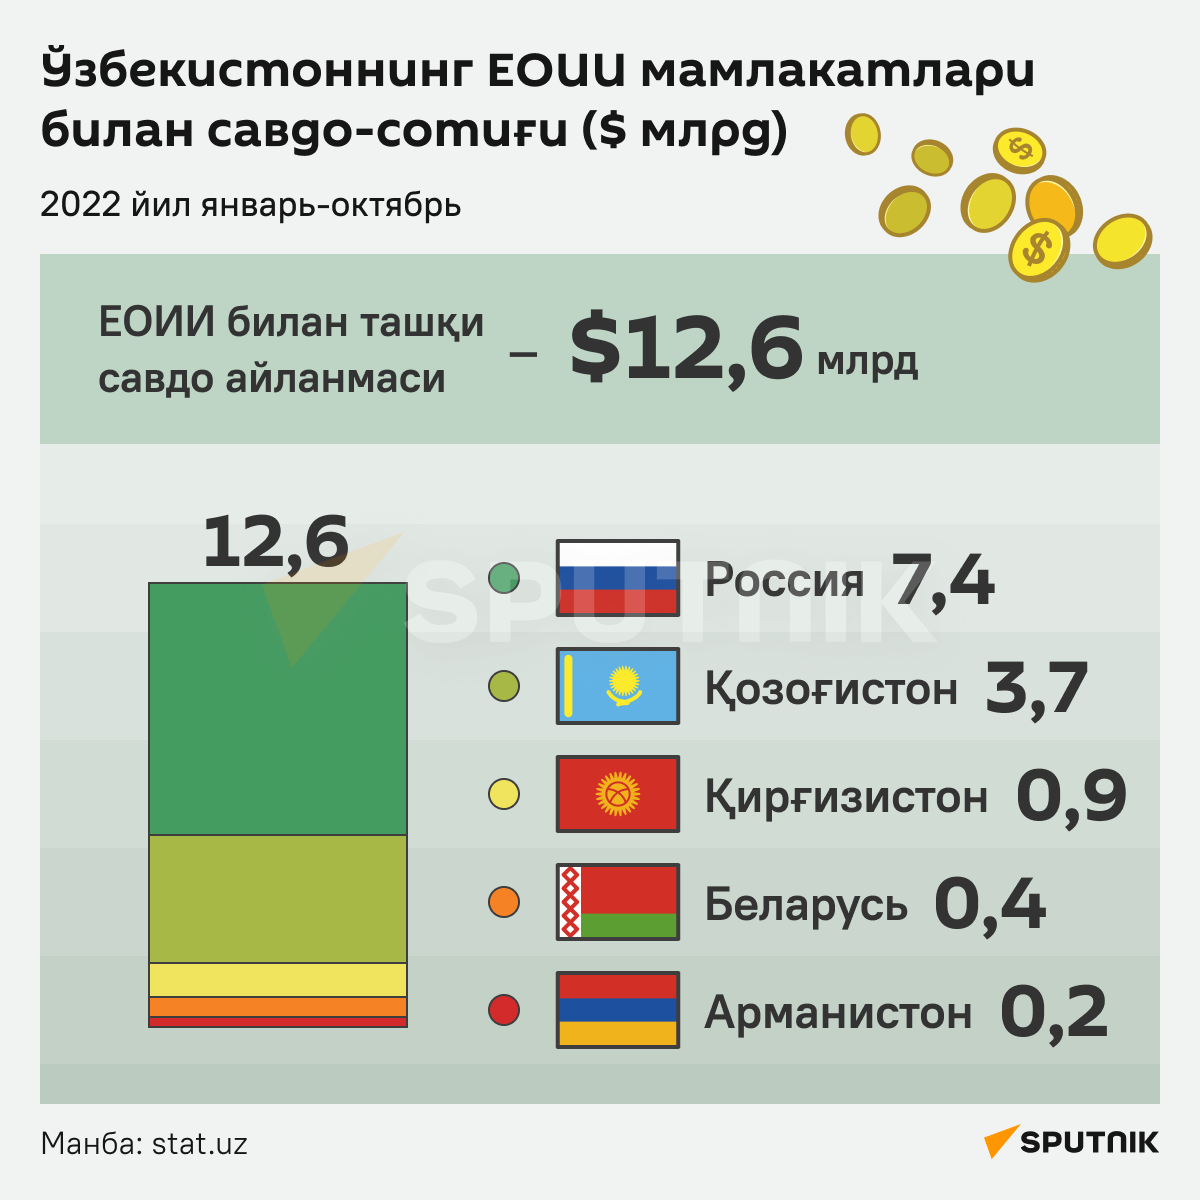 Торговля Узбекистана со странами ЕАЭС инфографика узб - Sputnik Ўзбекистон